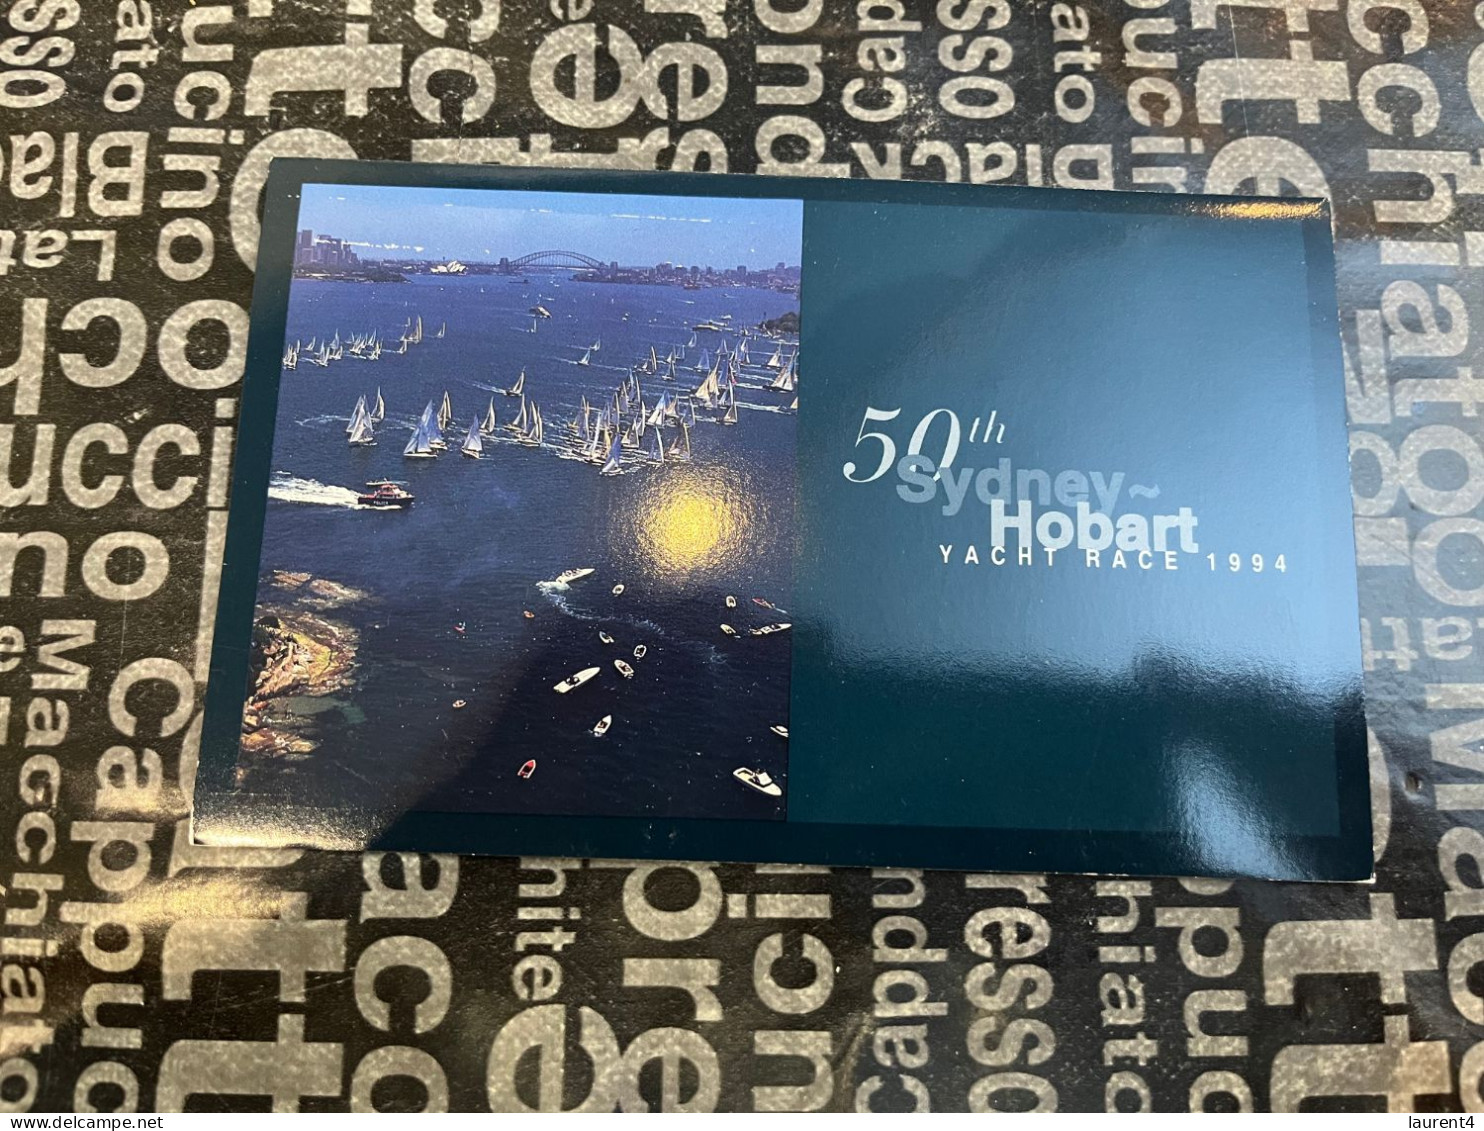 2-1-2024 (4 W 9) Australia Stamp Pack - Sydney To Habart Sailing Boat Race 50th Anniversary - Presentation Packs